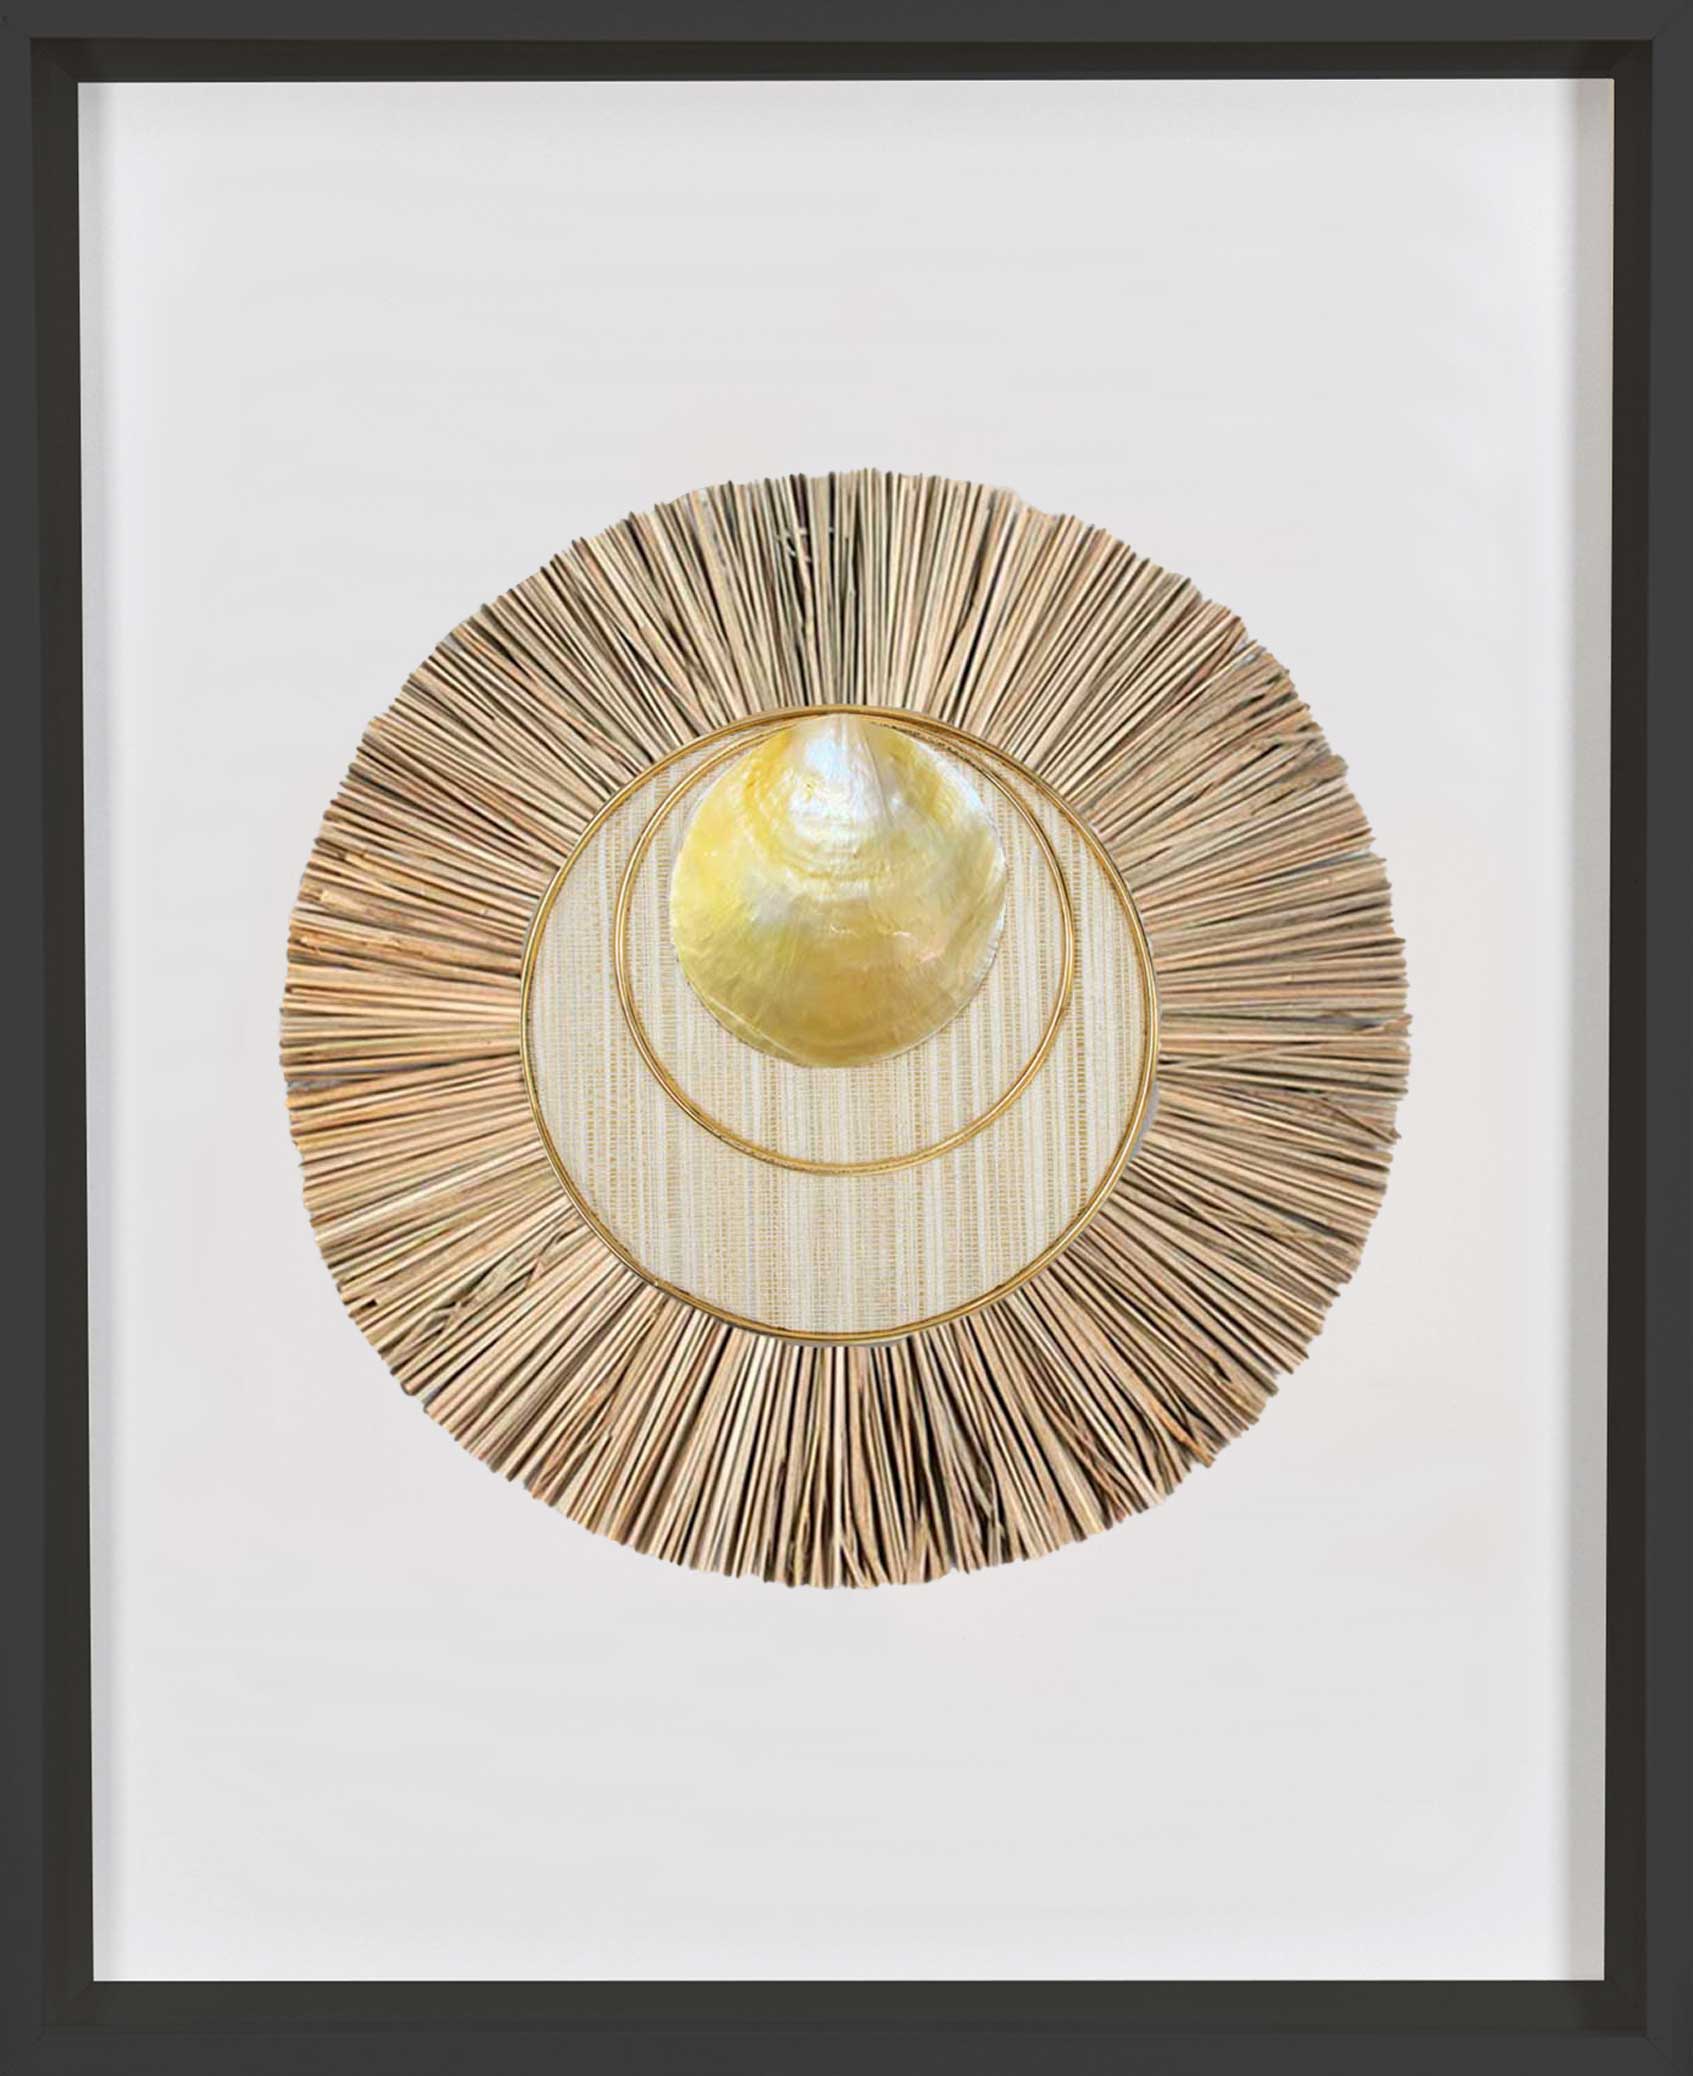 Bandhini Homewear Design Artwork Black Frame / 67 x 85 cm African Shell Disc and Wood Sticks Artwork 67 x 85 cm